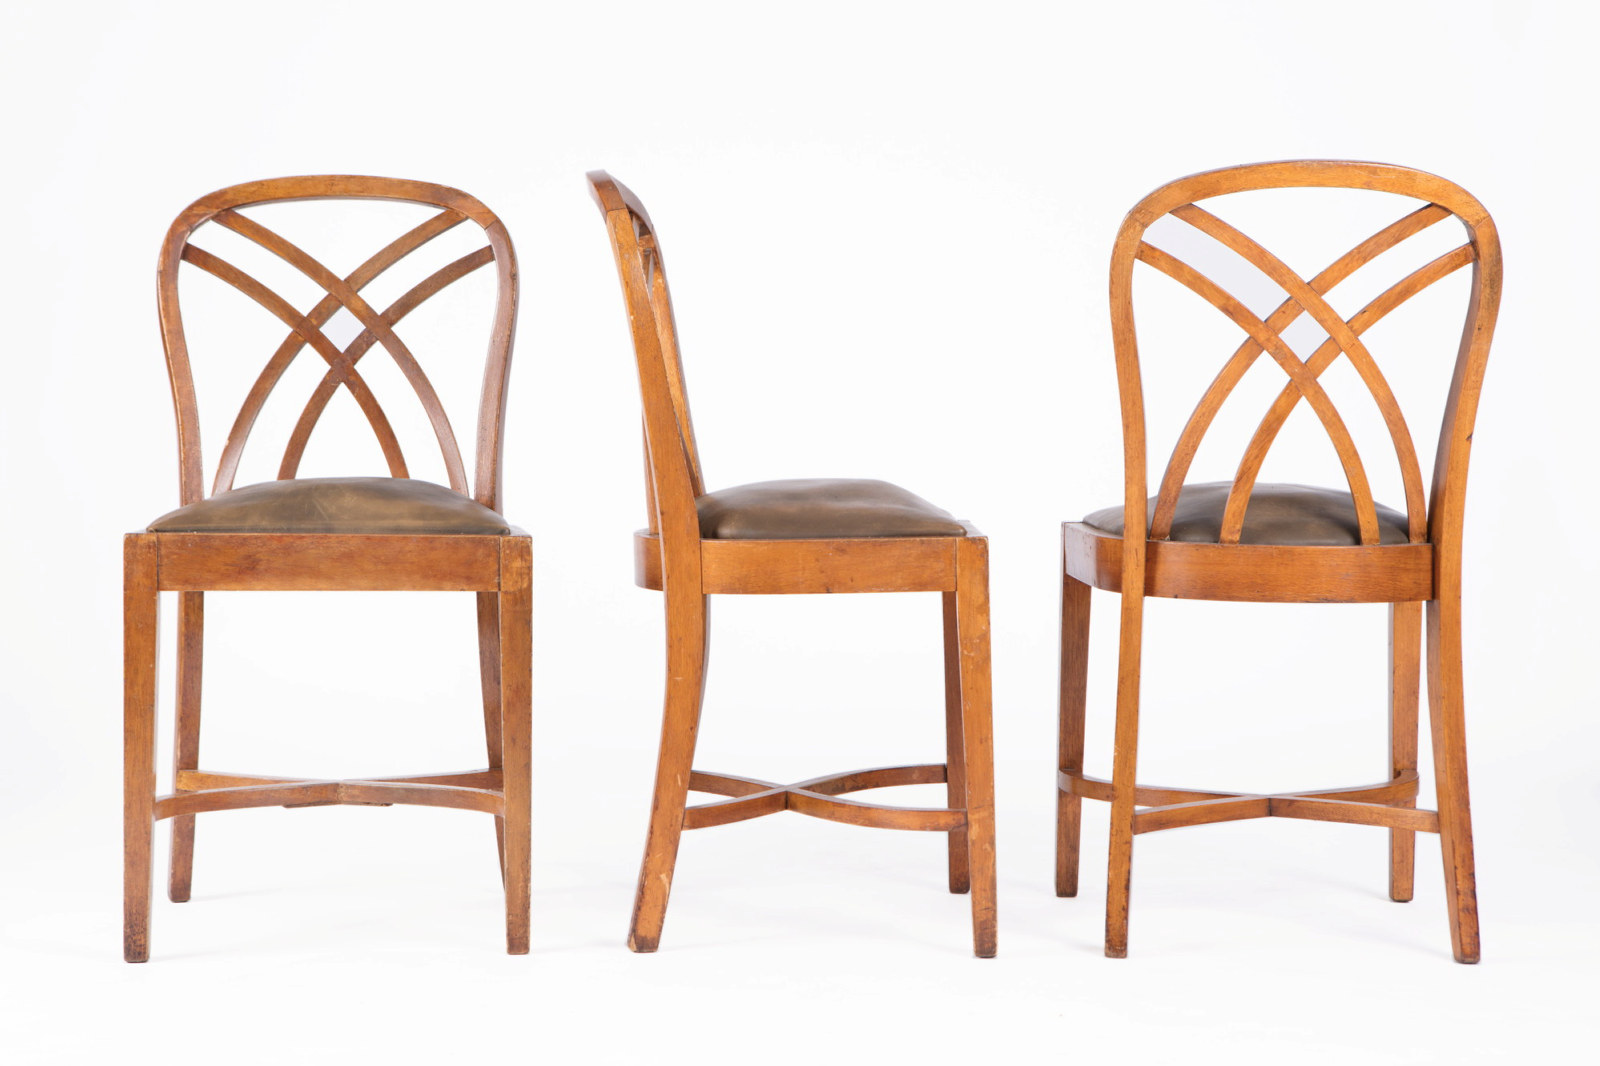 Dining chairs, Beard Watson & Co Ltd, Sydney, circa 1939; used to furnish an apartment at Seven Elizabeth Street, Sydney